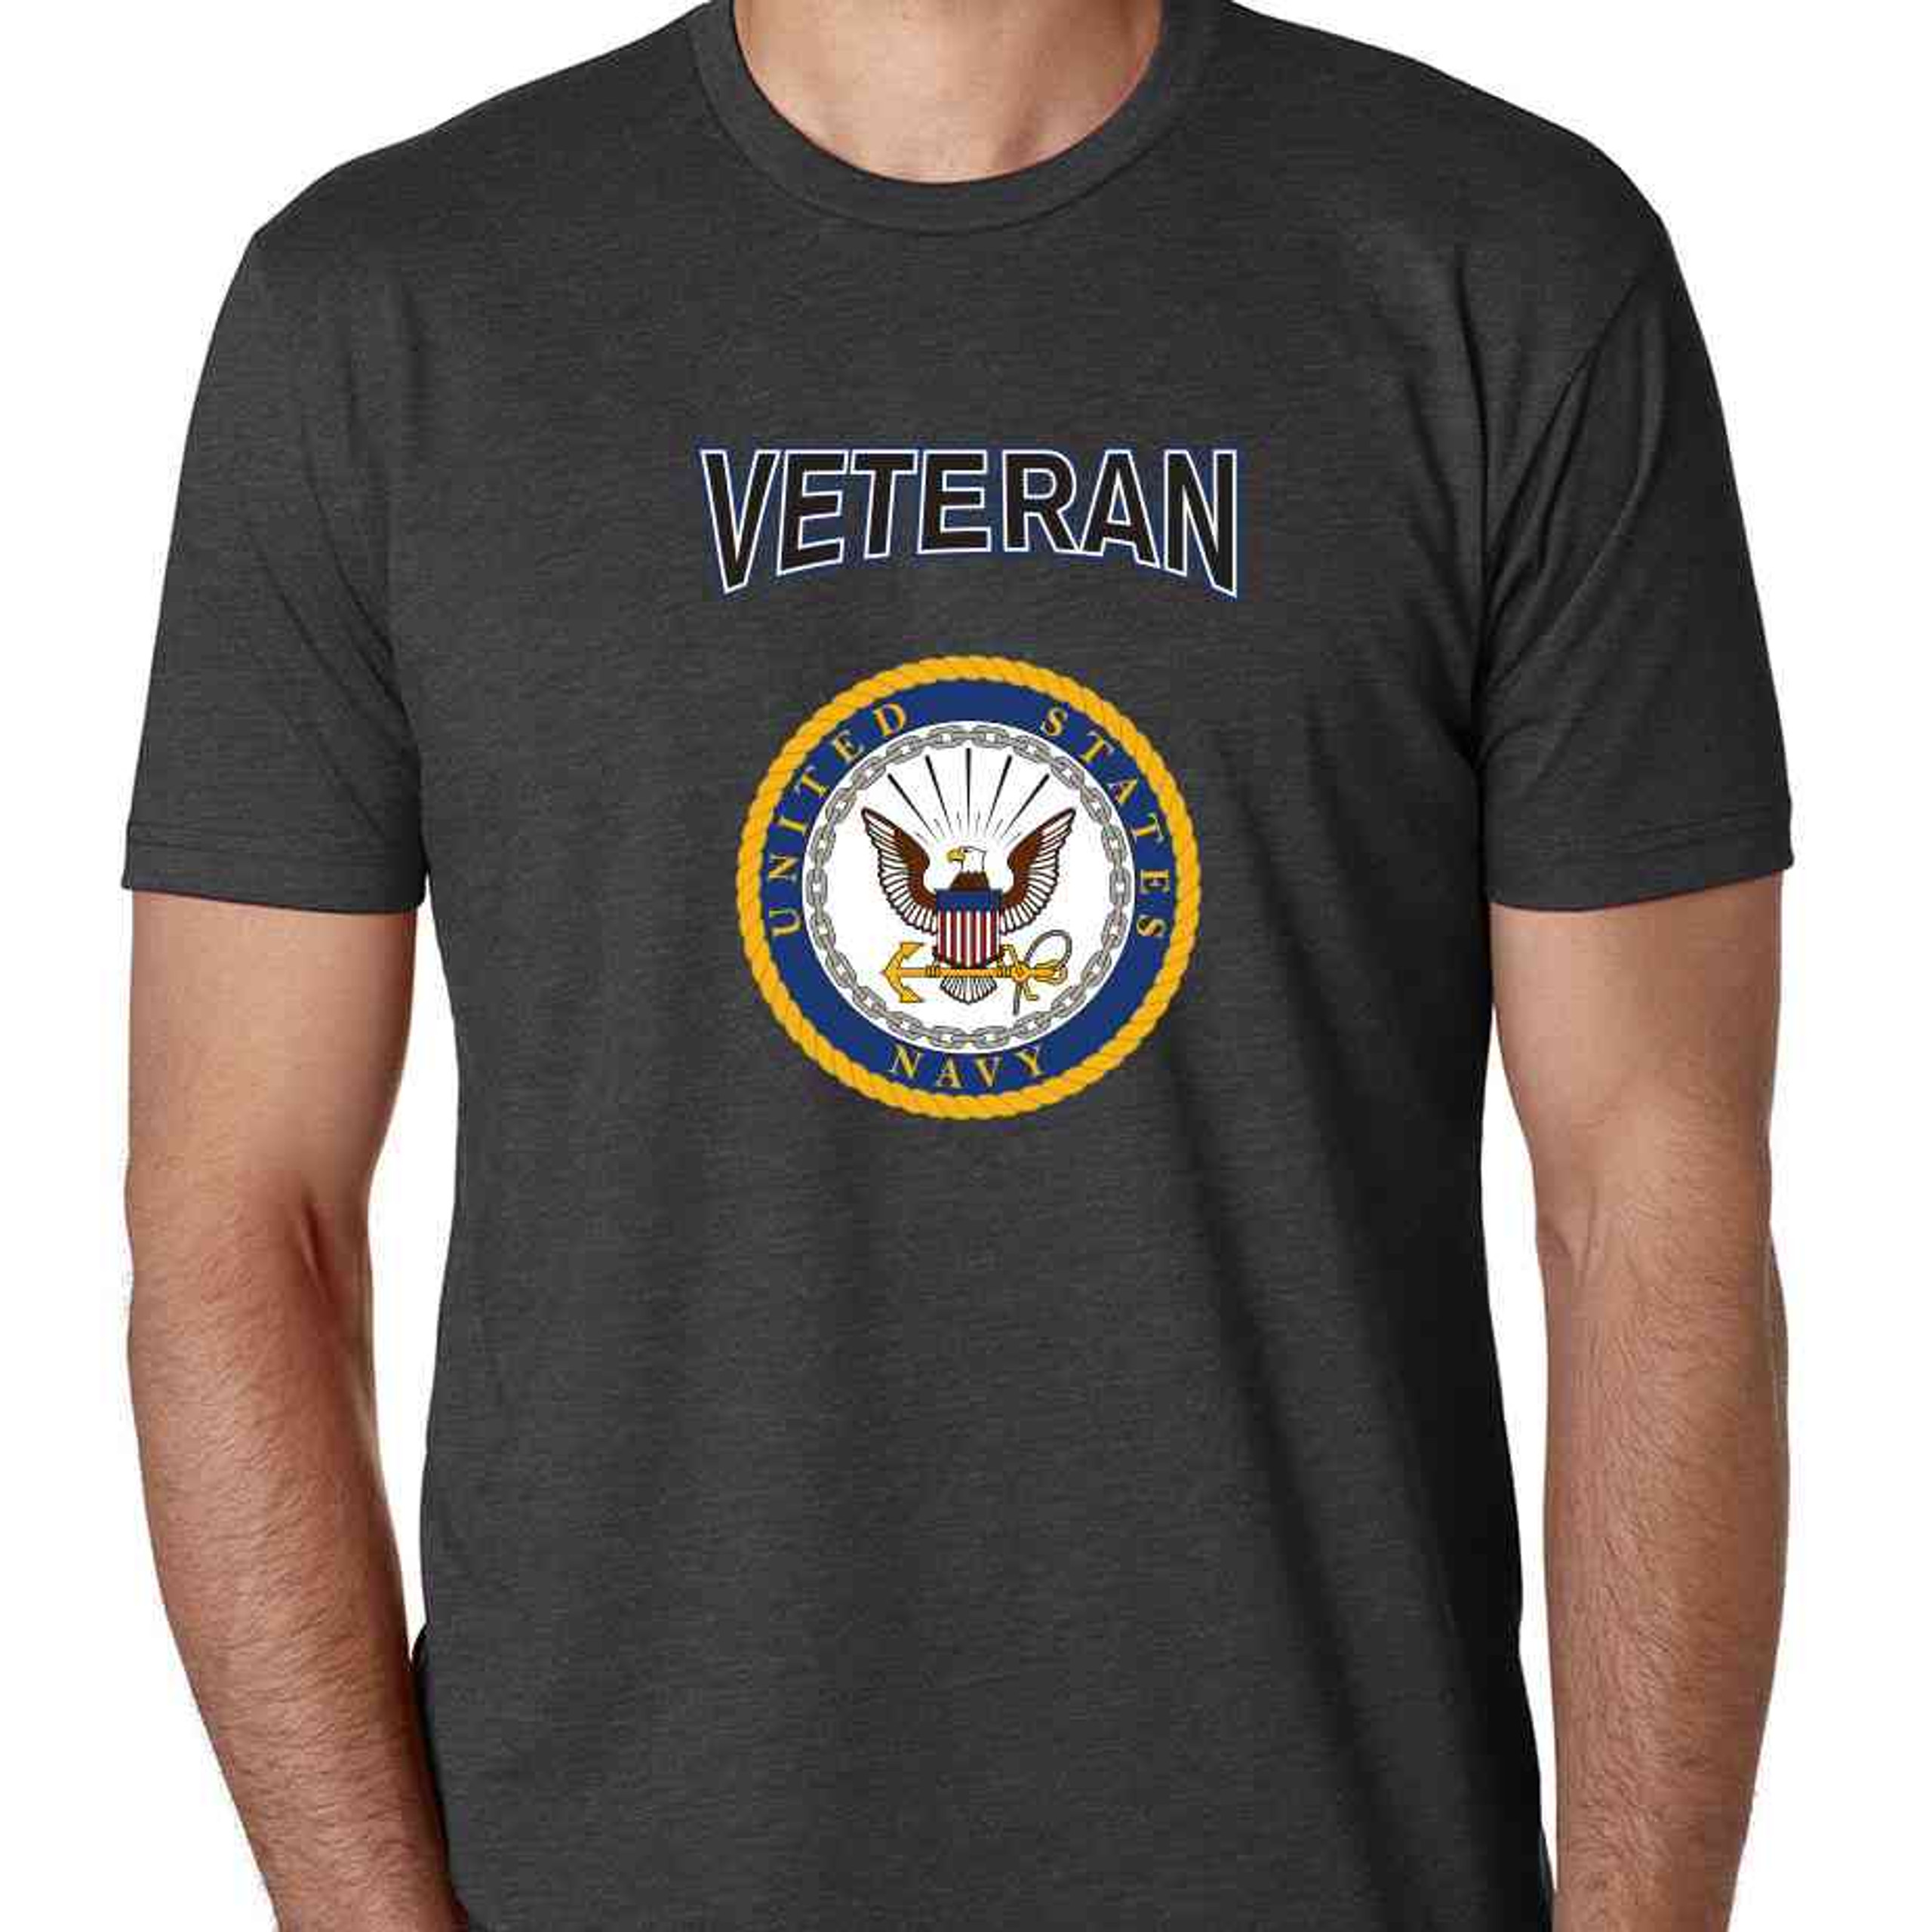 Officially Licensed U.S. Navy Gold Emblem Veteran T-Shirt